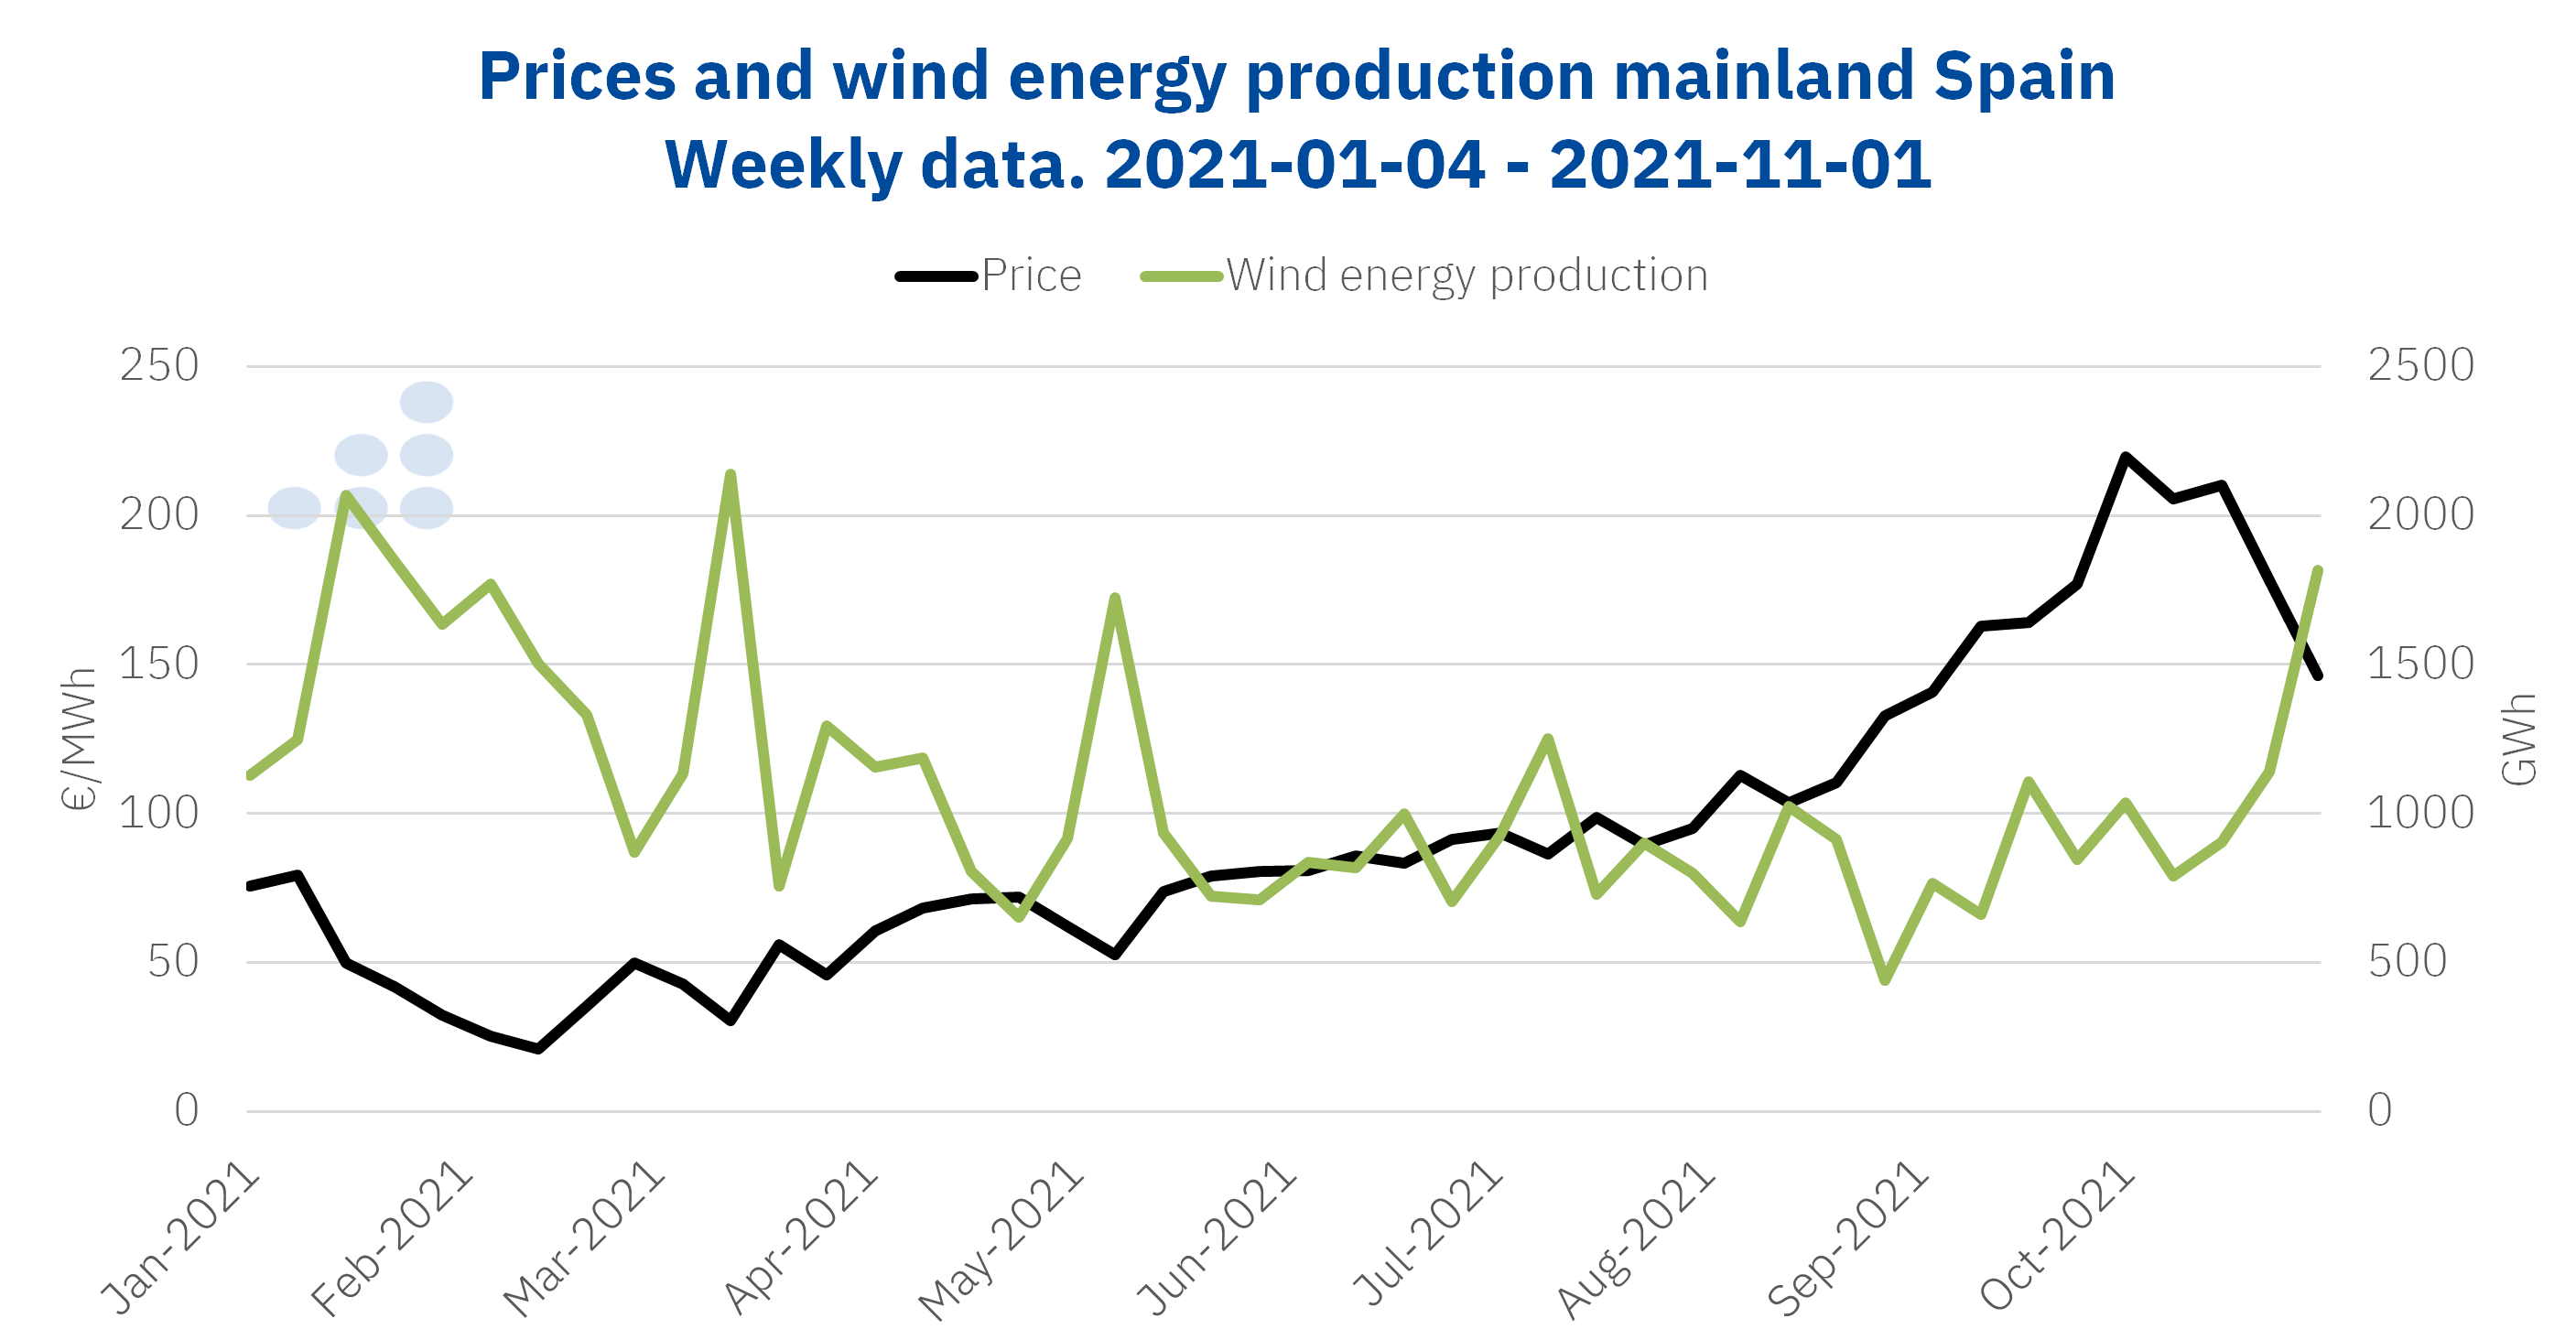 AleaSoft - Prices wind energy production mainland spain 2021